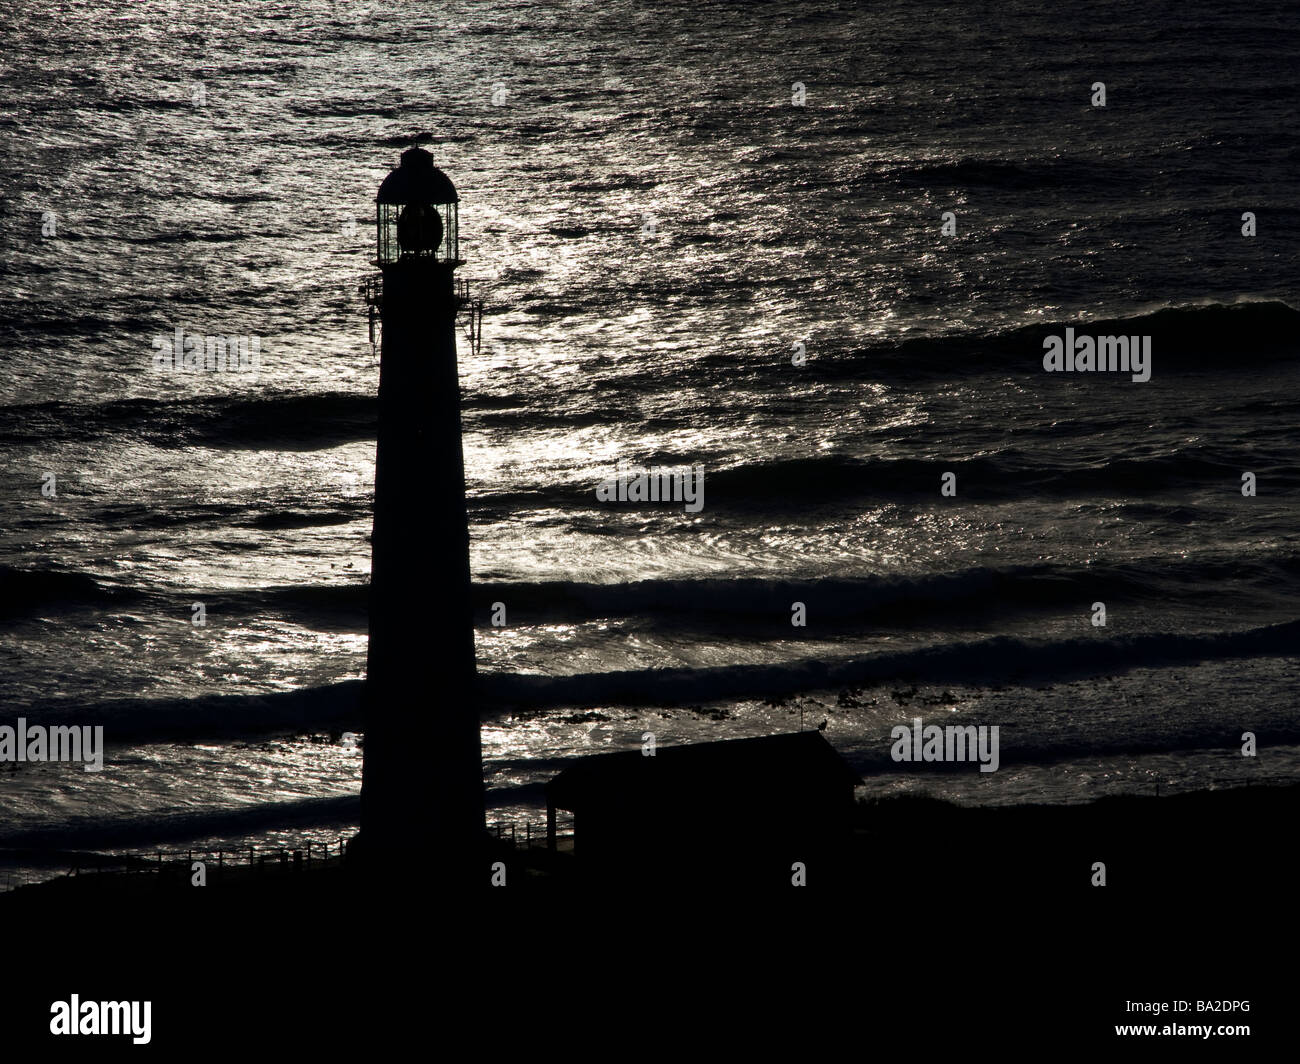 Slangkop Lighthouse Silhouetted against the Ocean at Dusk, Kommetjie Stock Photo